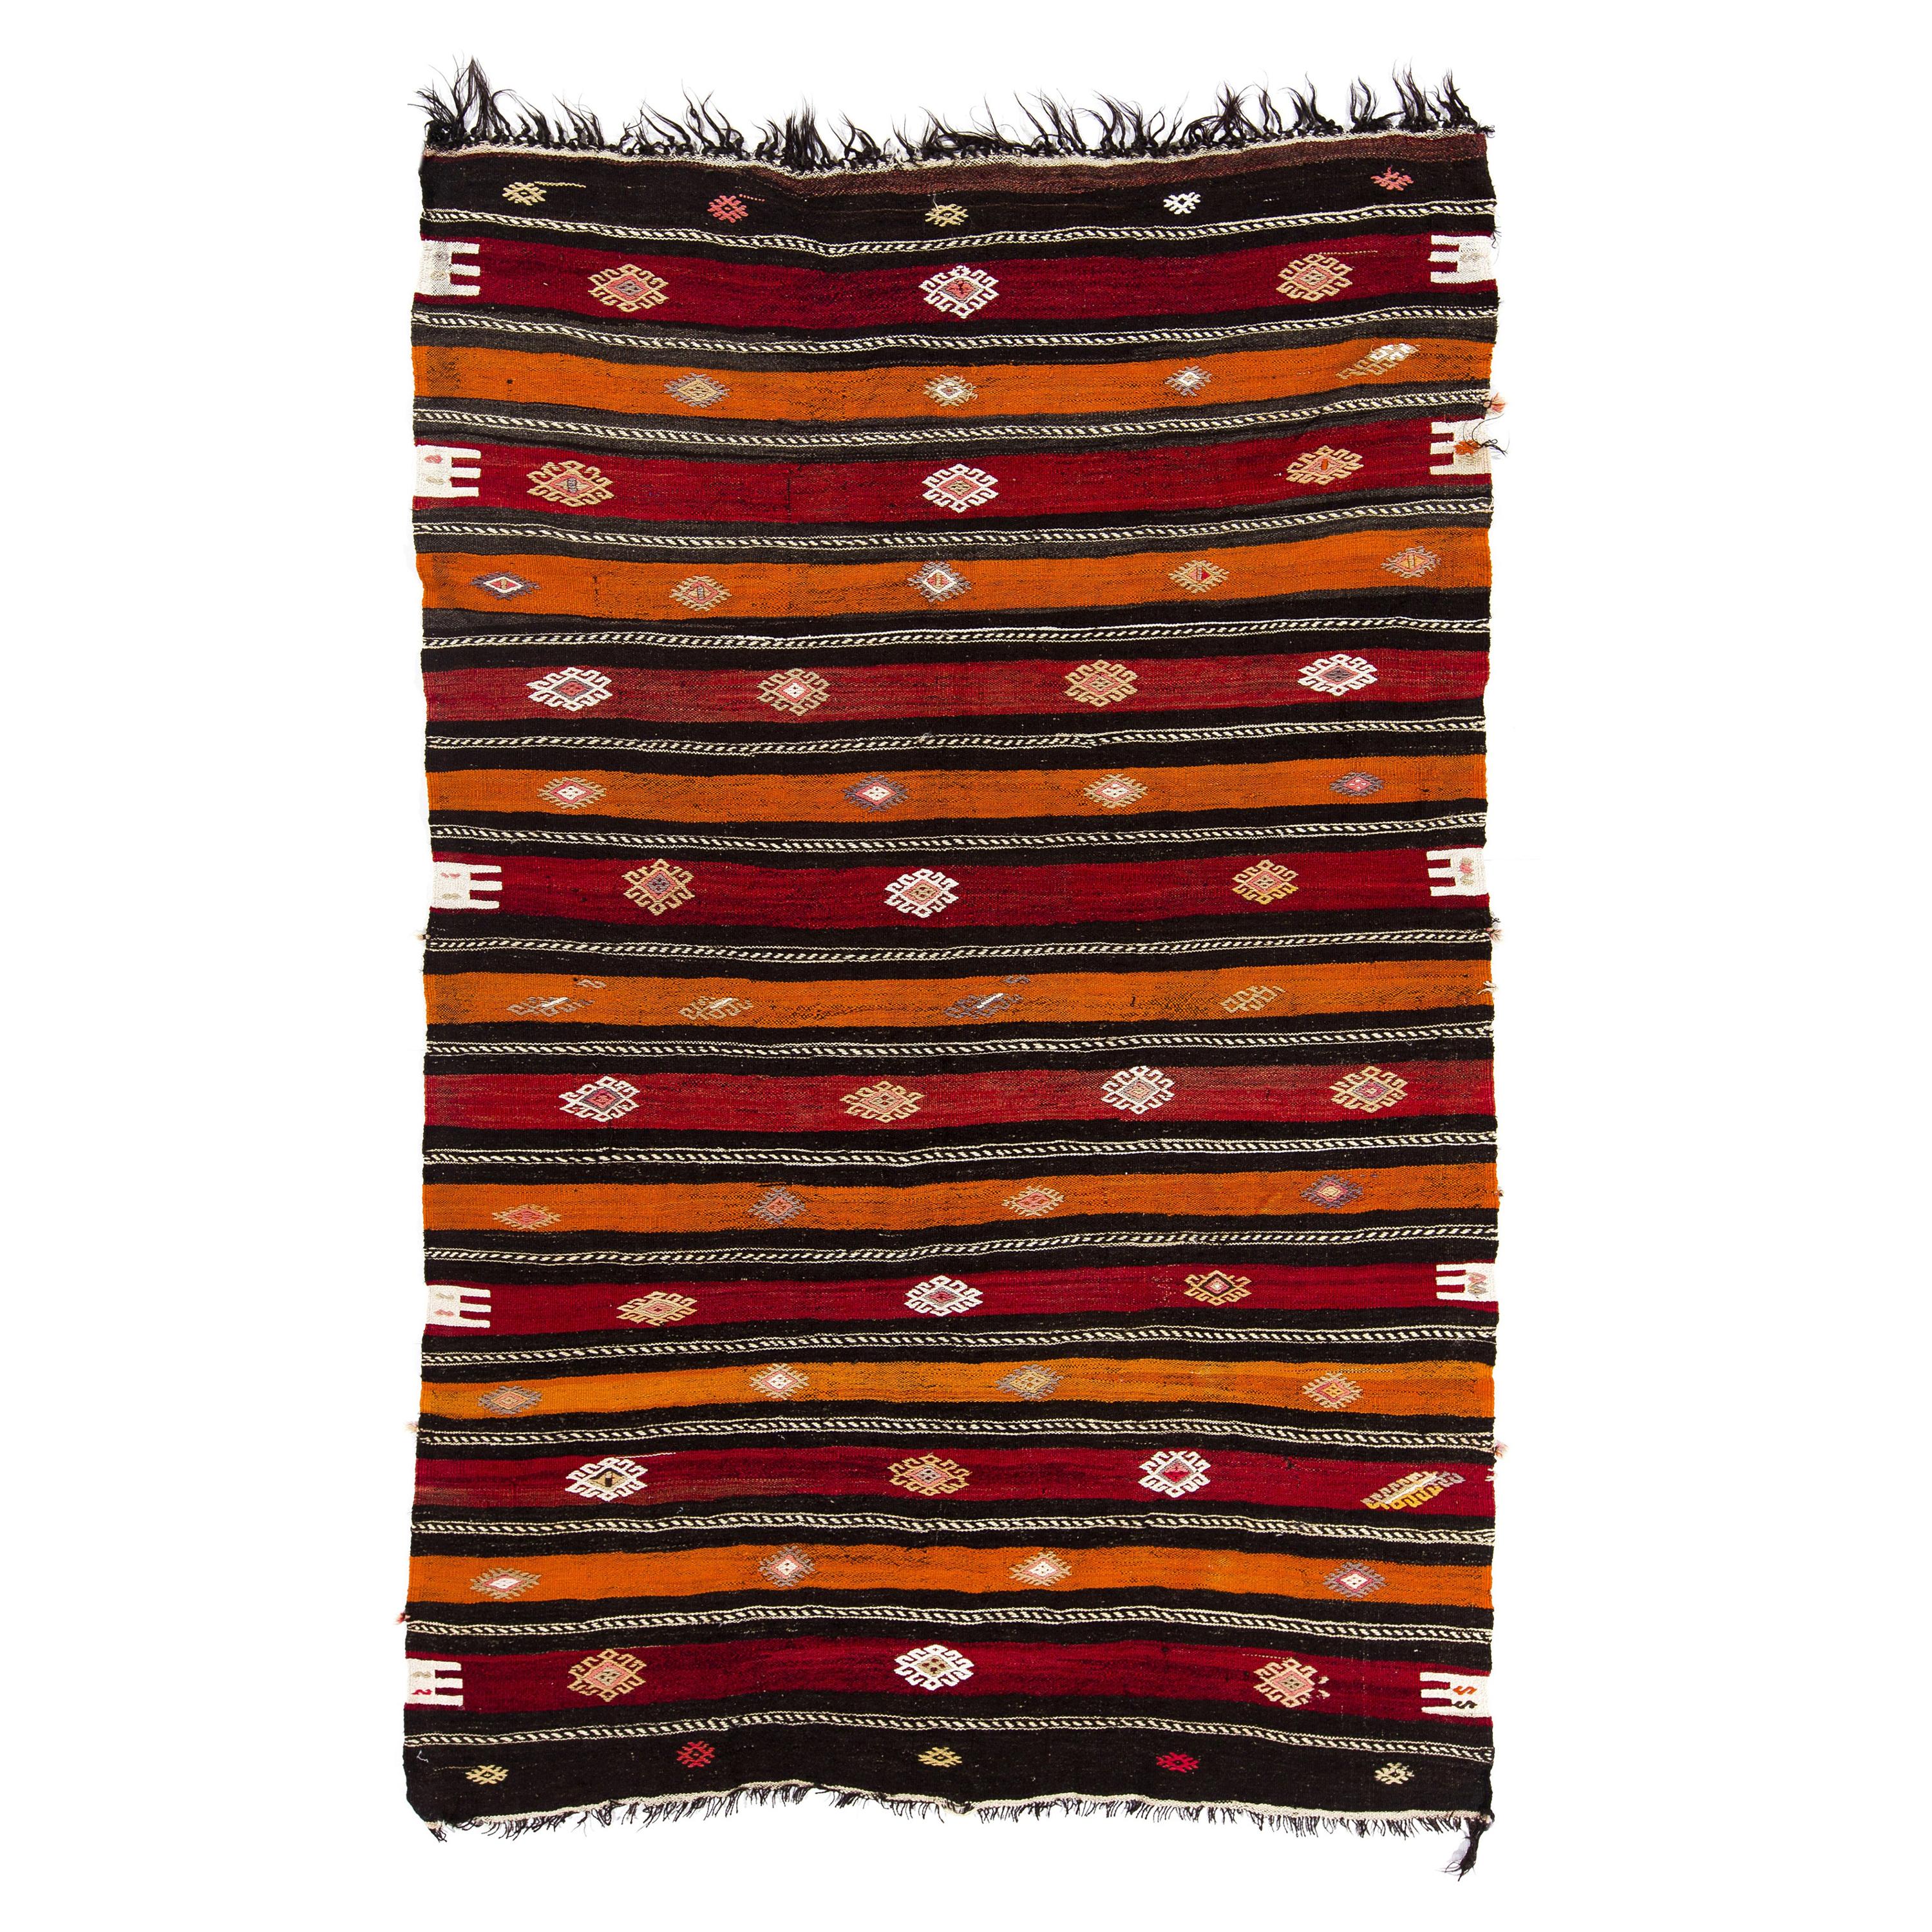 6.3x9.8 Ft Handmade Banded Turkish Kilim Rug in Red, Orange, Black & White Wool For Sale